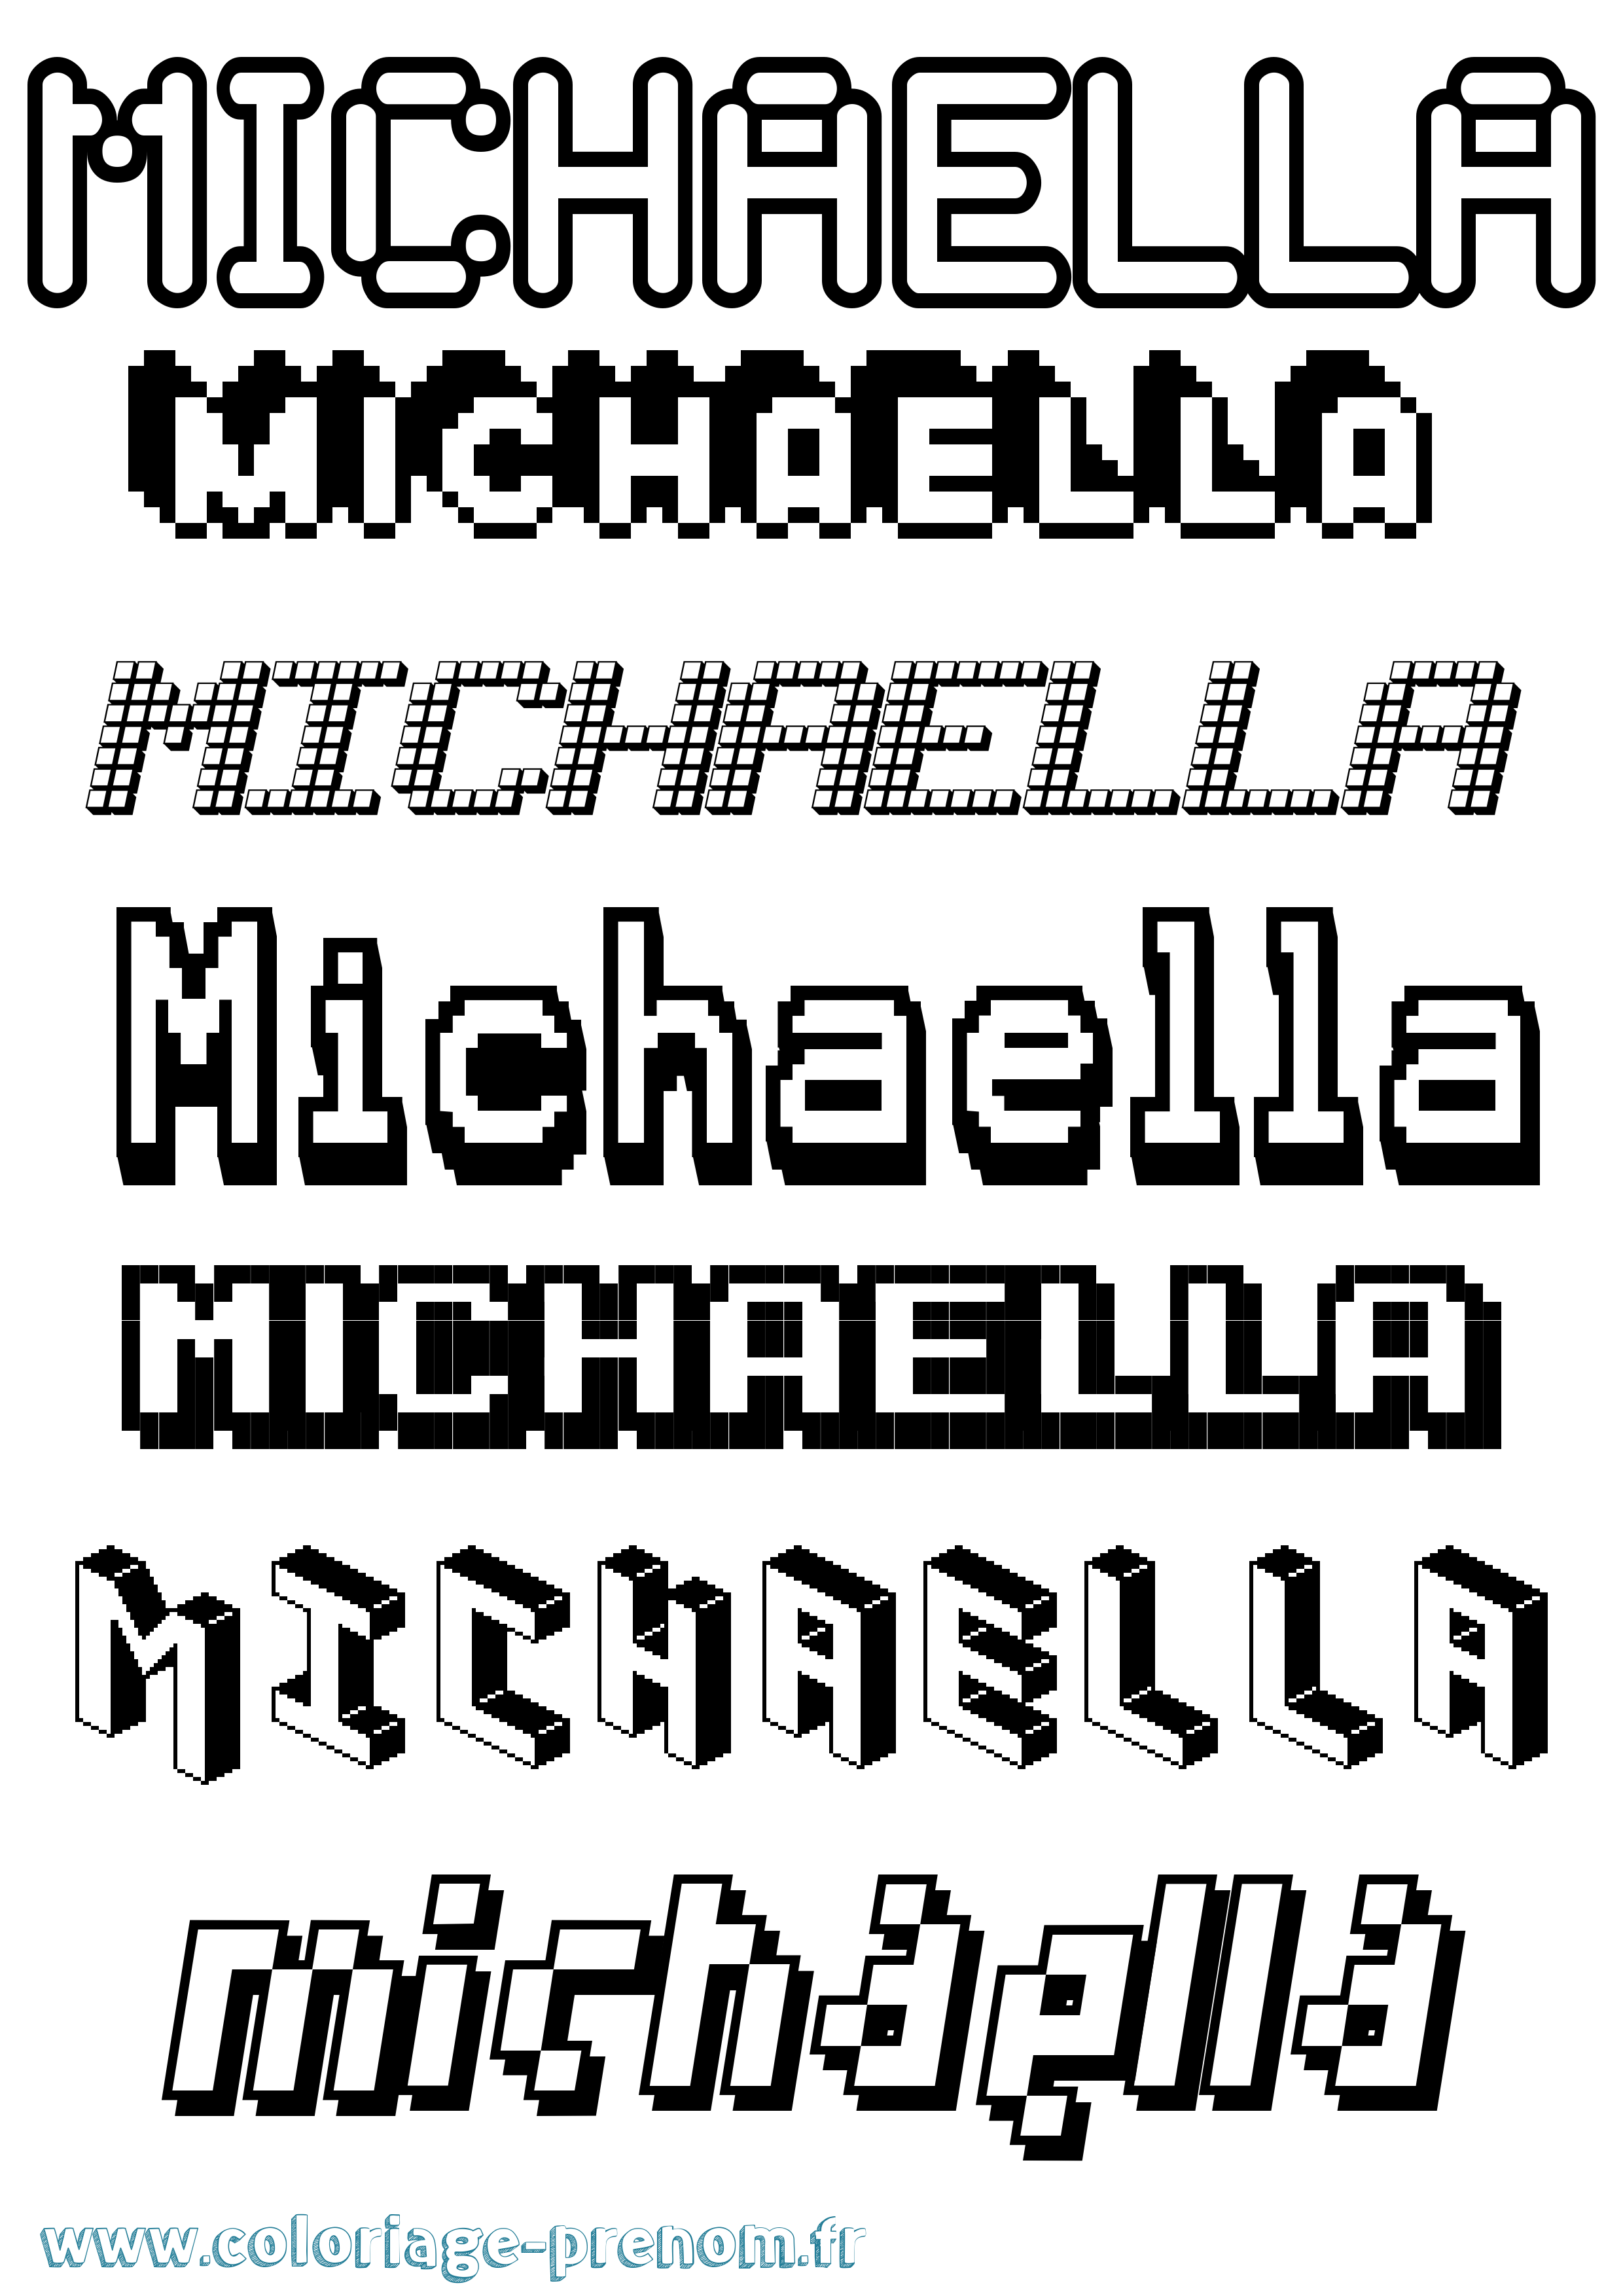 Coloriage prénom Michaella Pixel